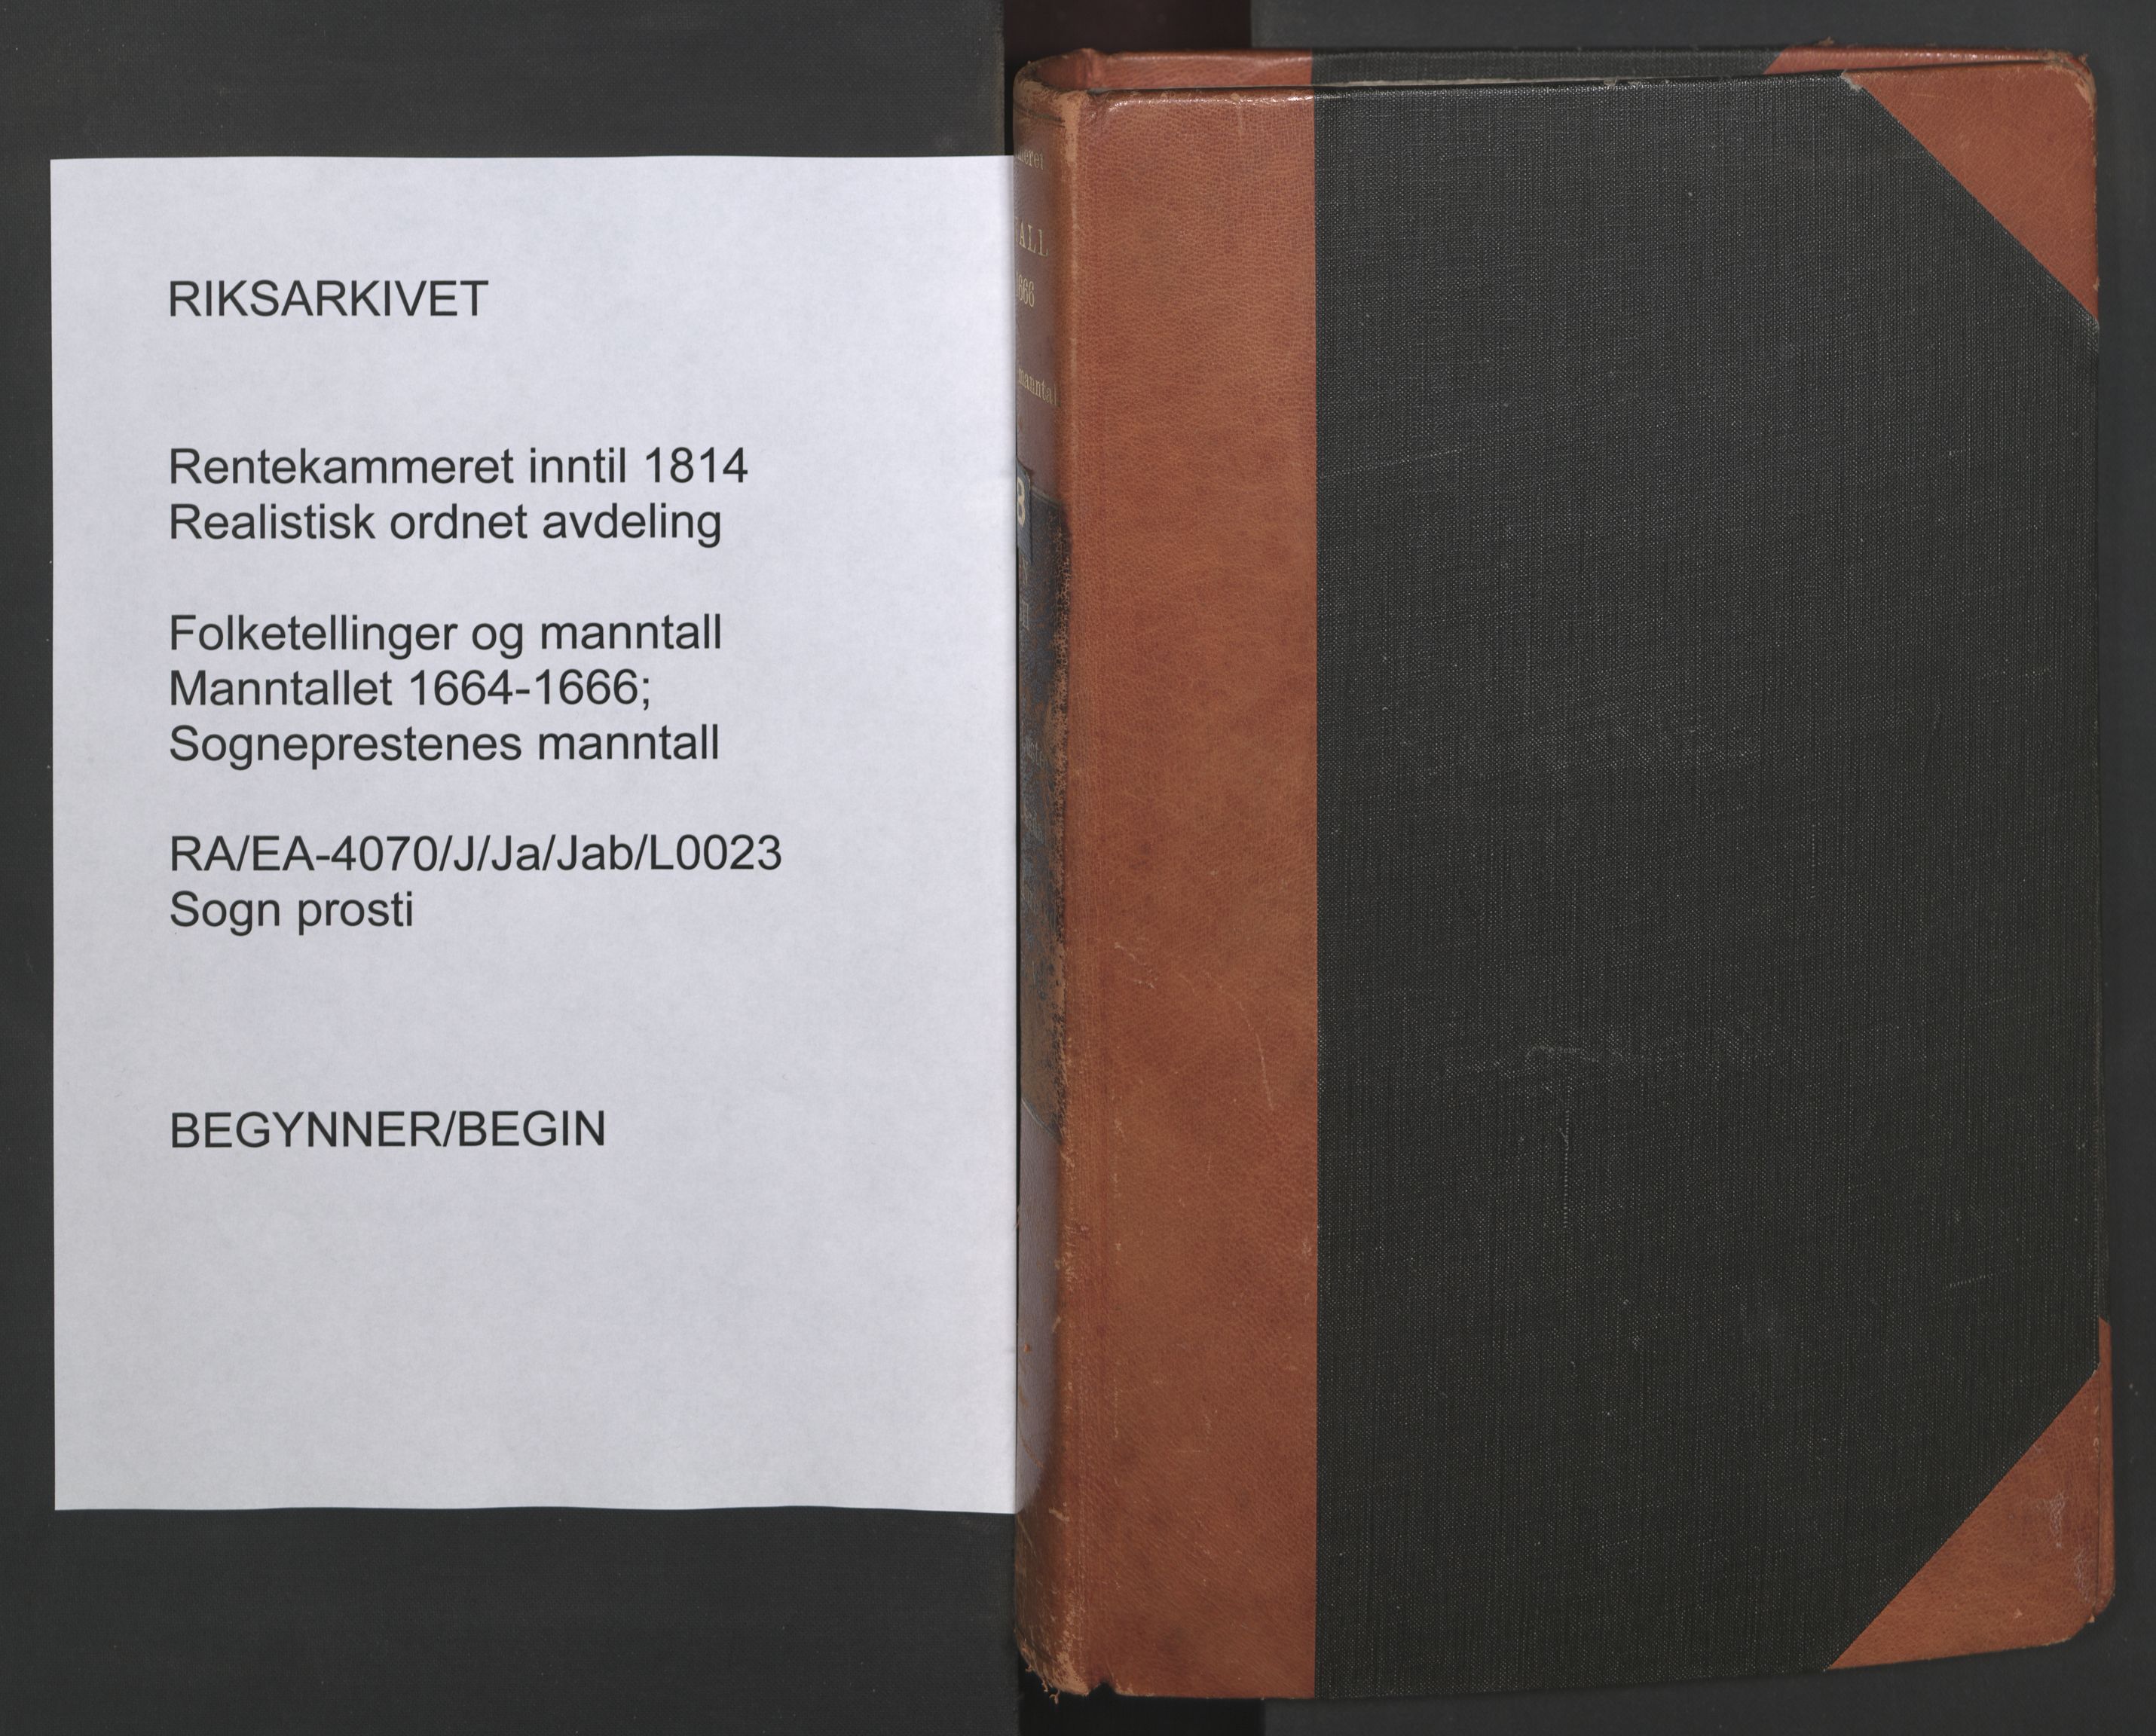 RA, Sogneprestenes manntall 1664-1666, nr. 23: Sogn prosti, 1664-1666